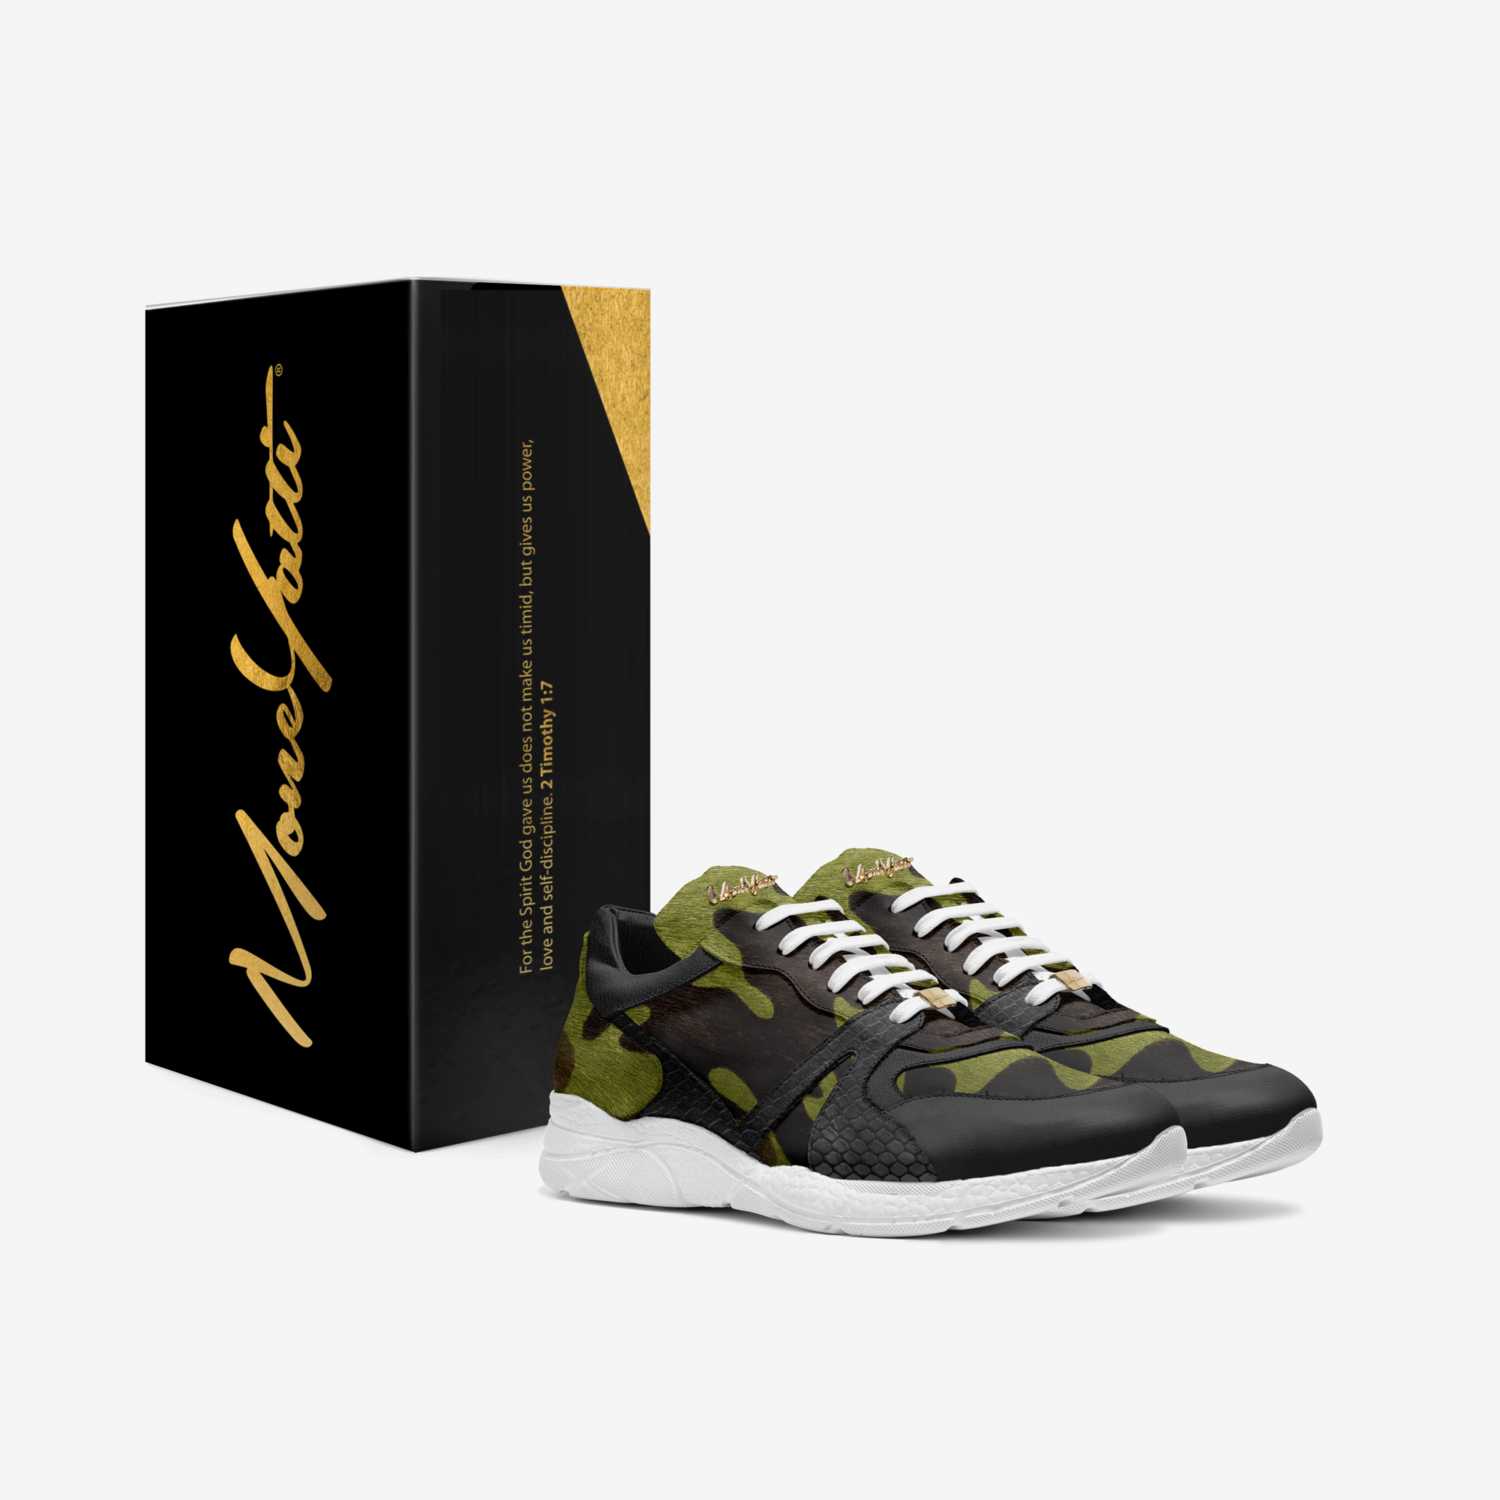 Nem P 53 custom made in Italy shoes by Moneyatti Brand | Box view